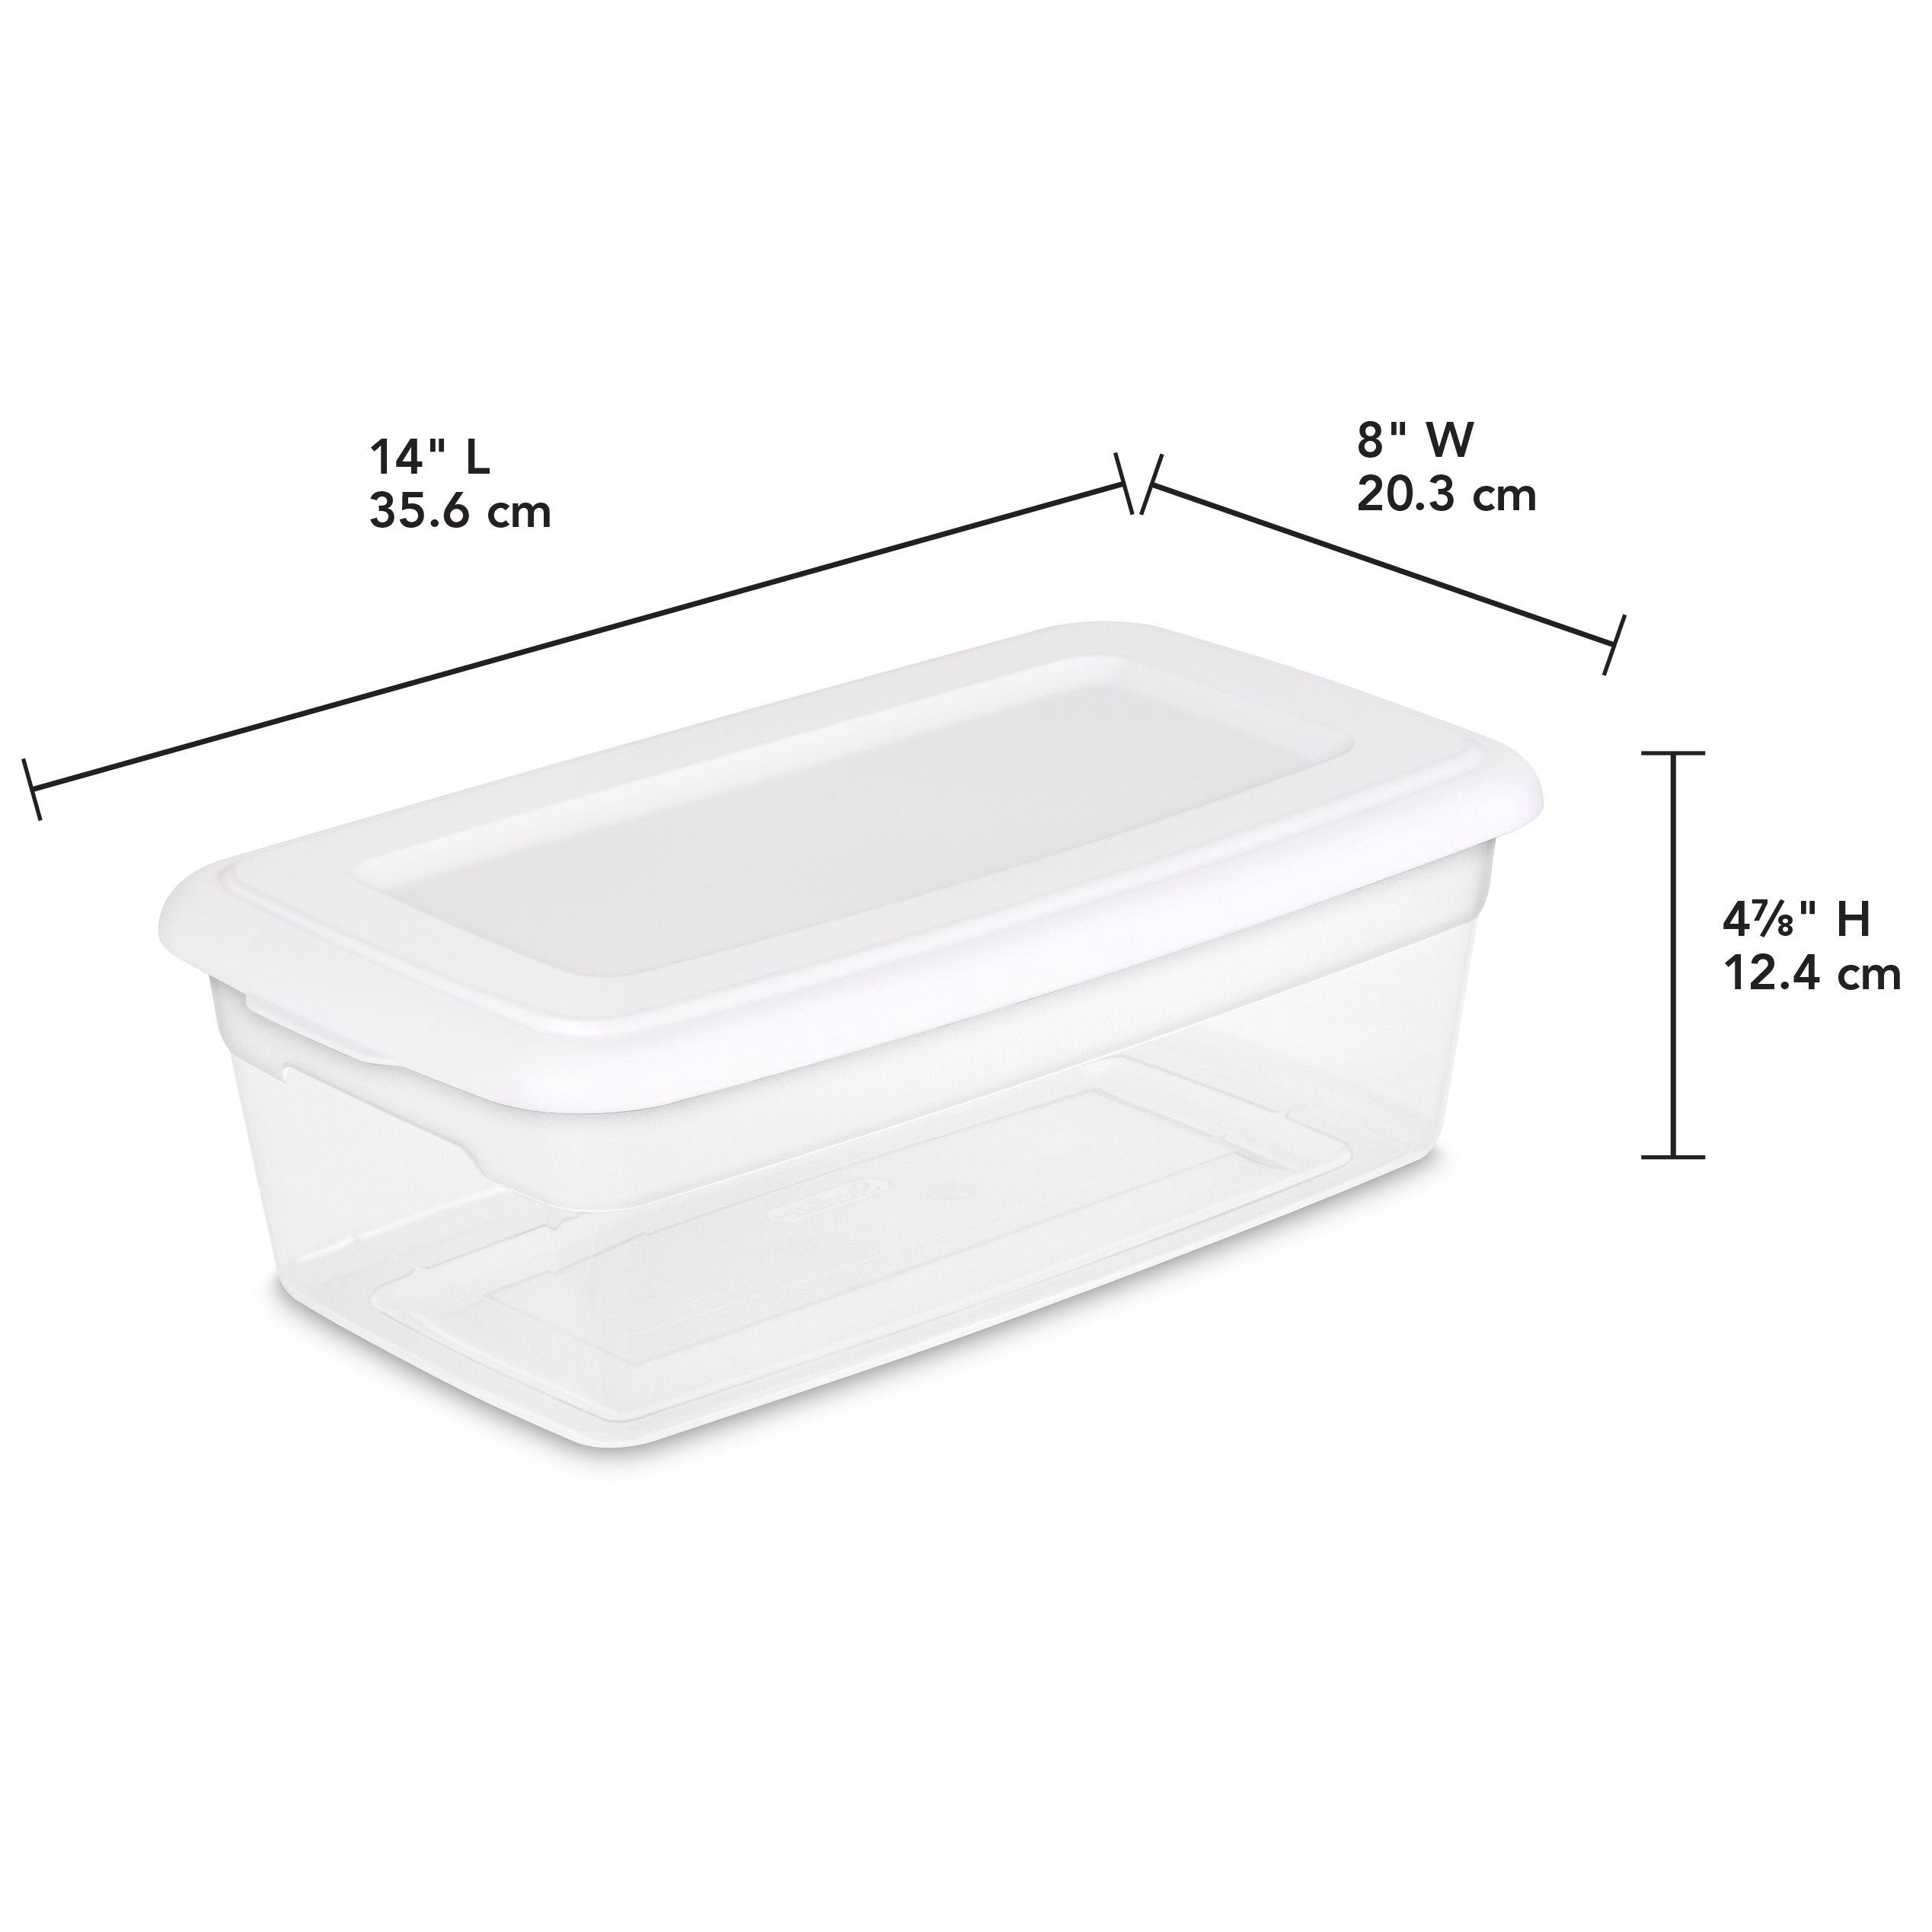 Sterilite 6 Qt. Clear Plastic Storage Box with White Lid - image 4 of 6